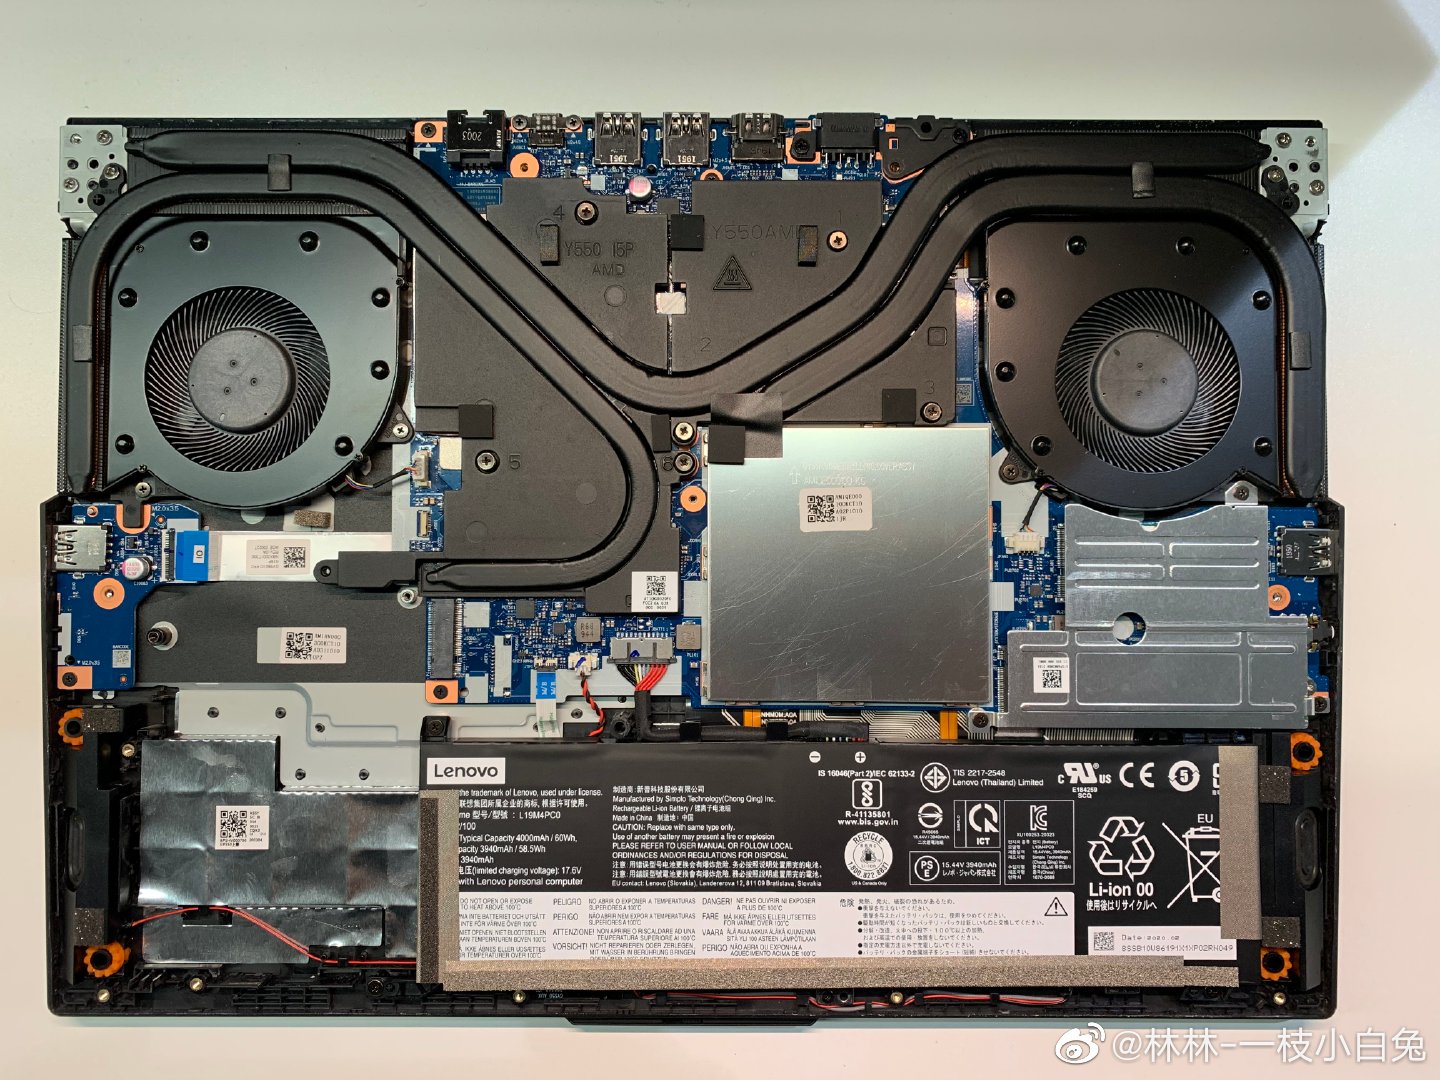 Lenovo 5 Disassembly (RAM, SSD, options)